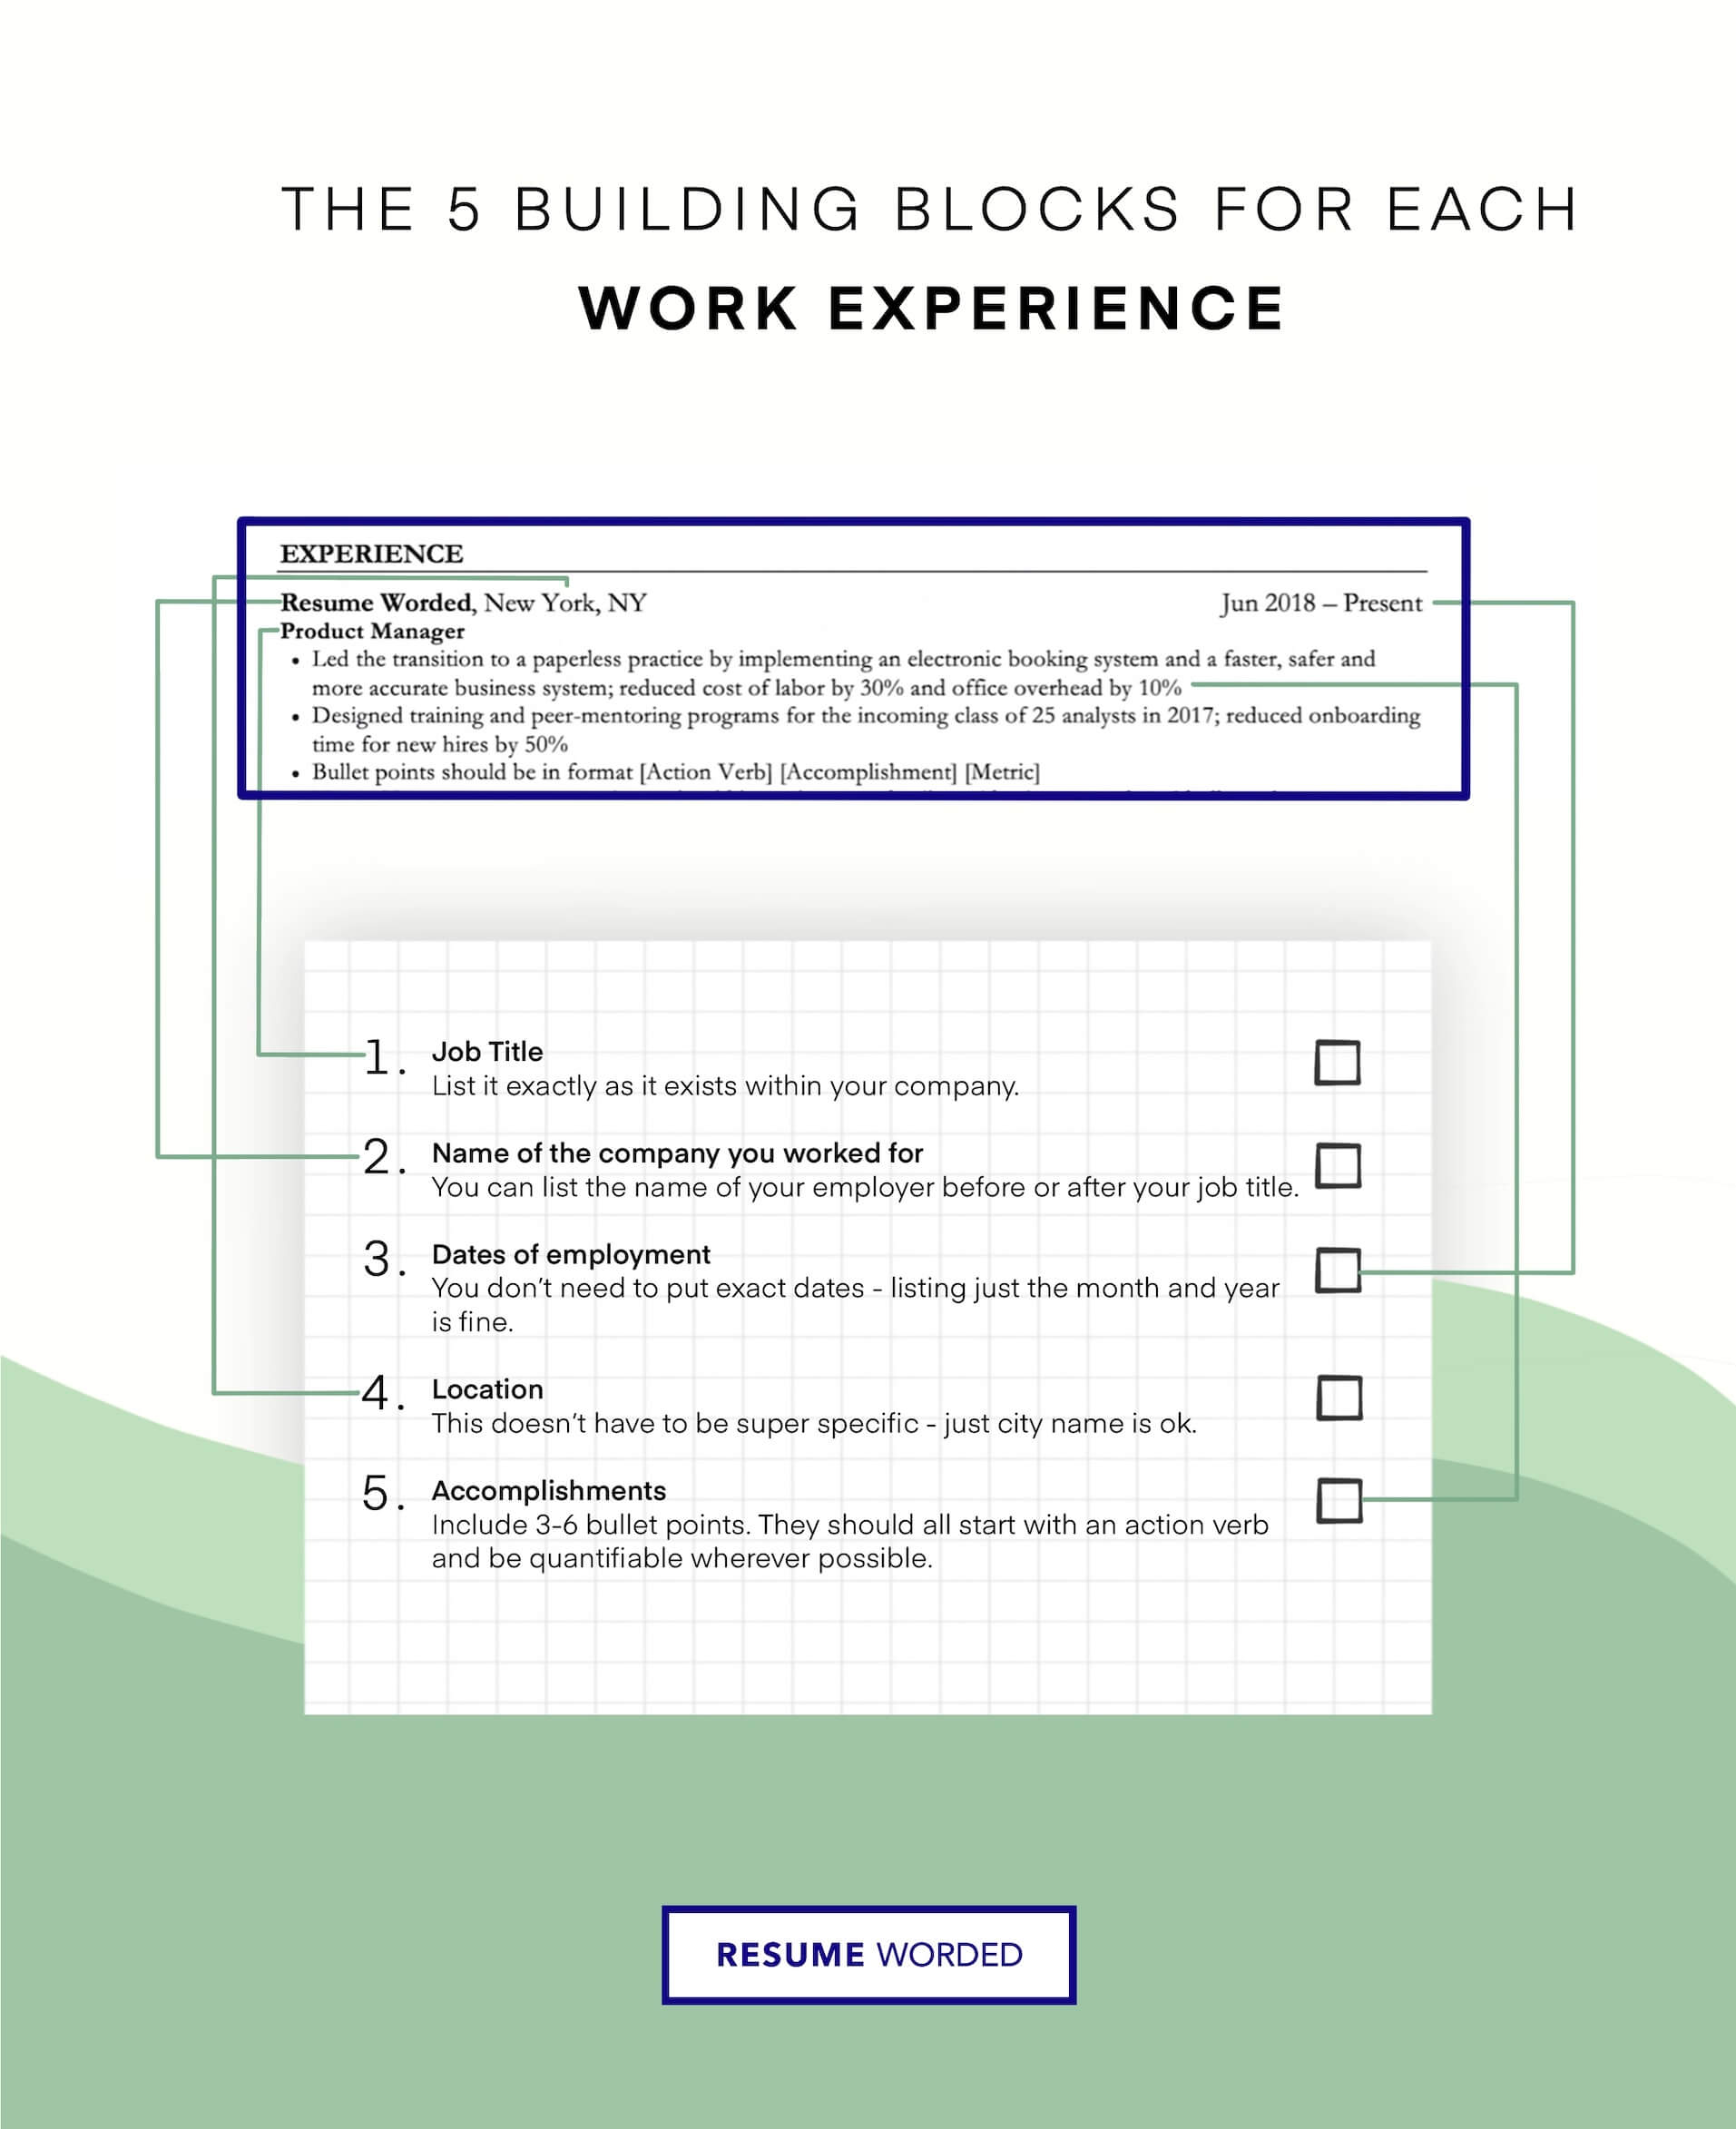 Demonstrate Agile Experience - Scrum Master CV